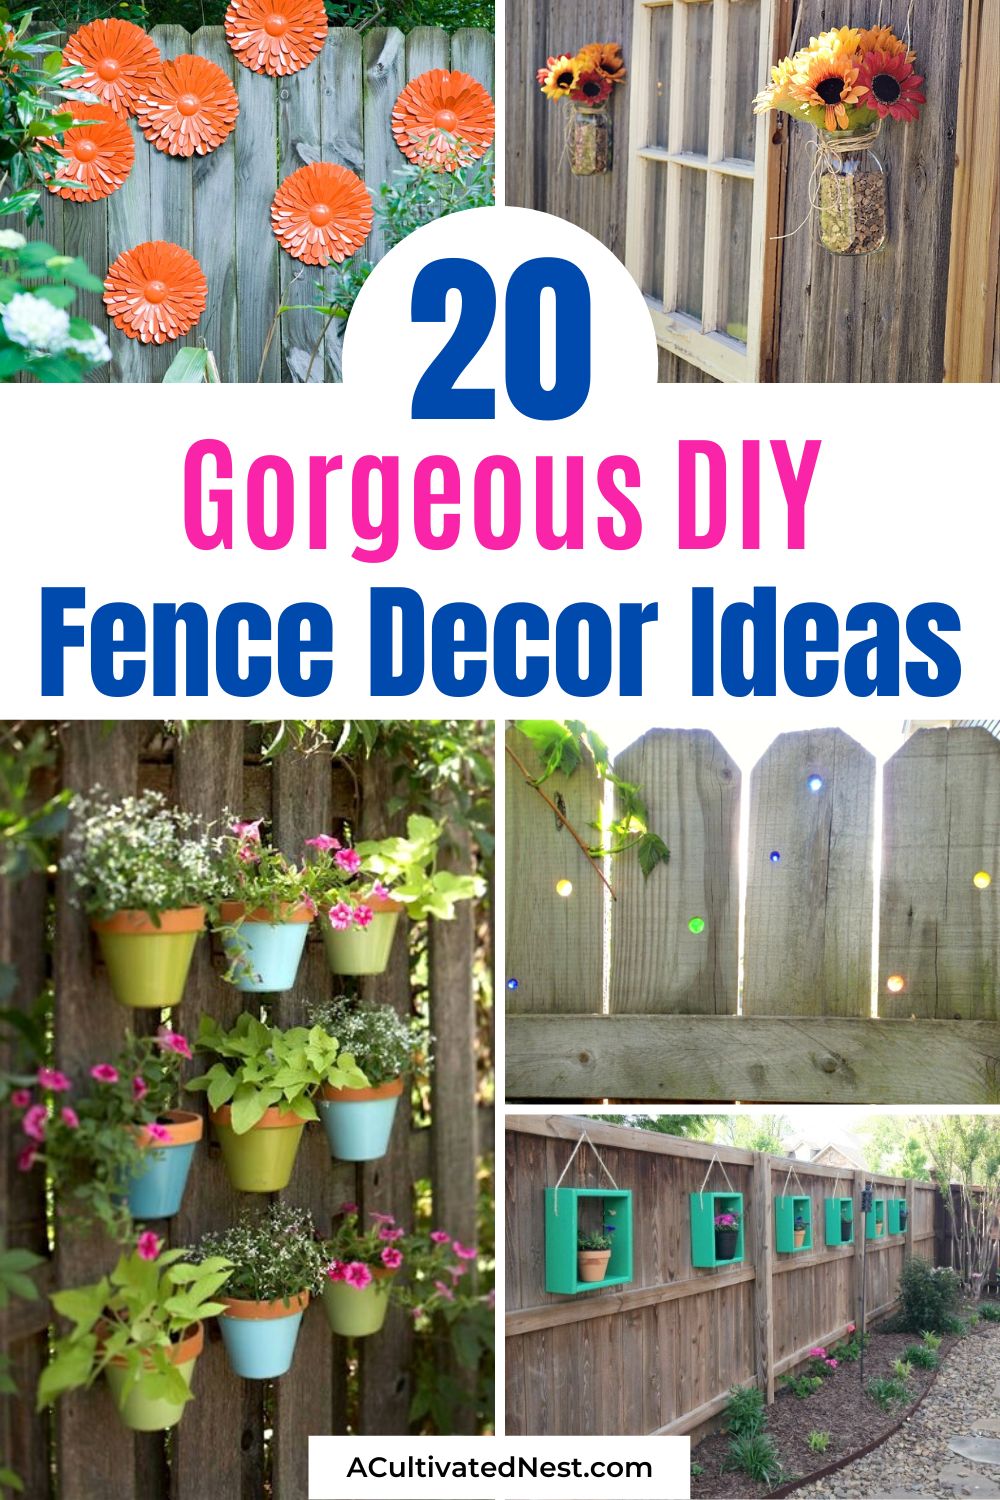 24 Gorgeous Backyard Fence Decor Ideas